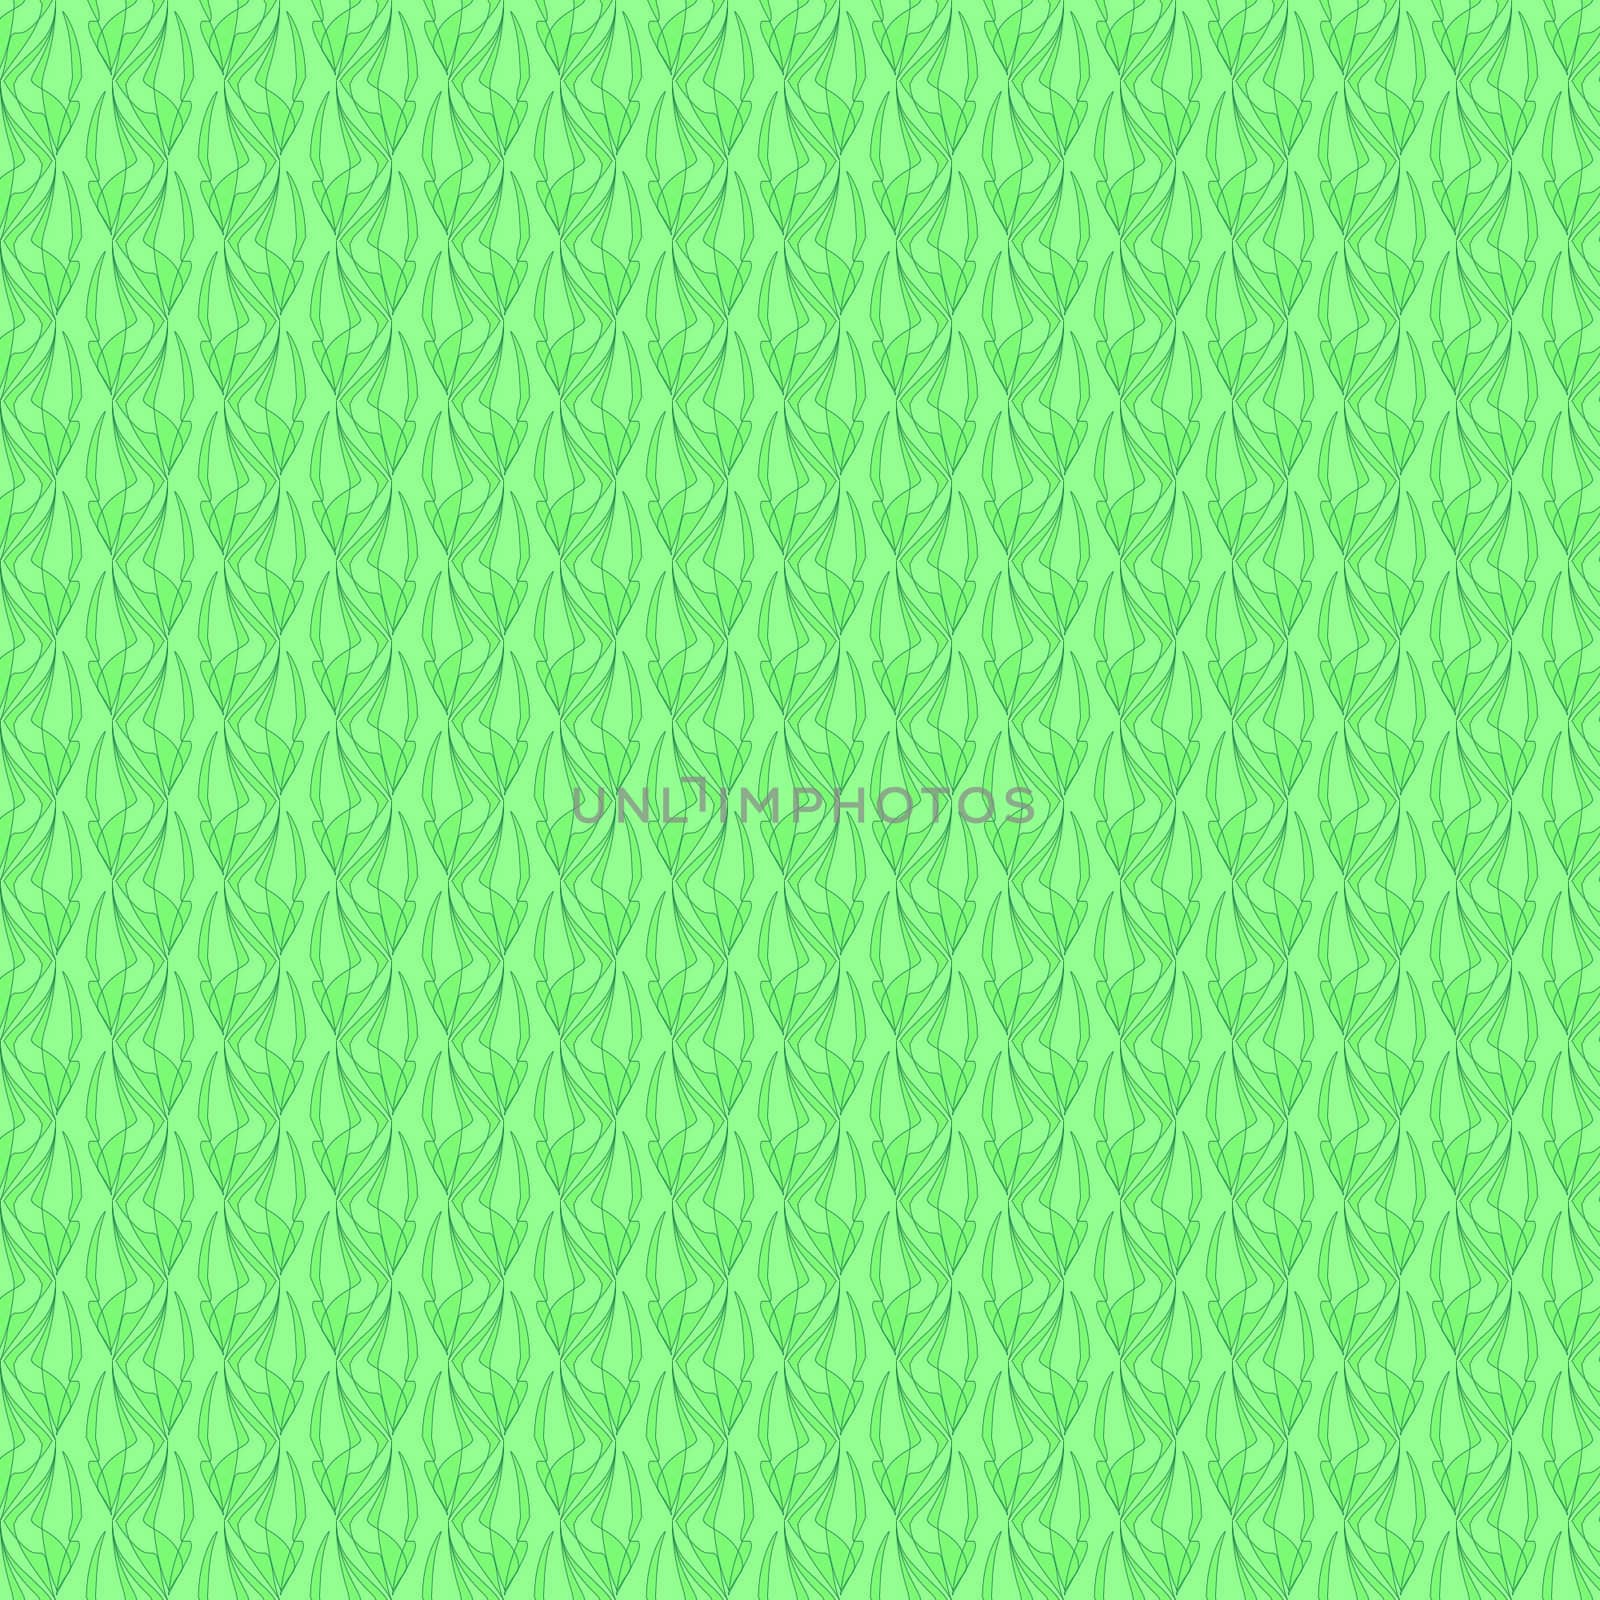 Seamless green wallpaper pattern by Nickondr